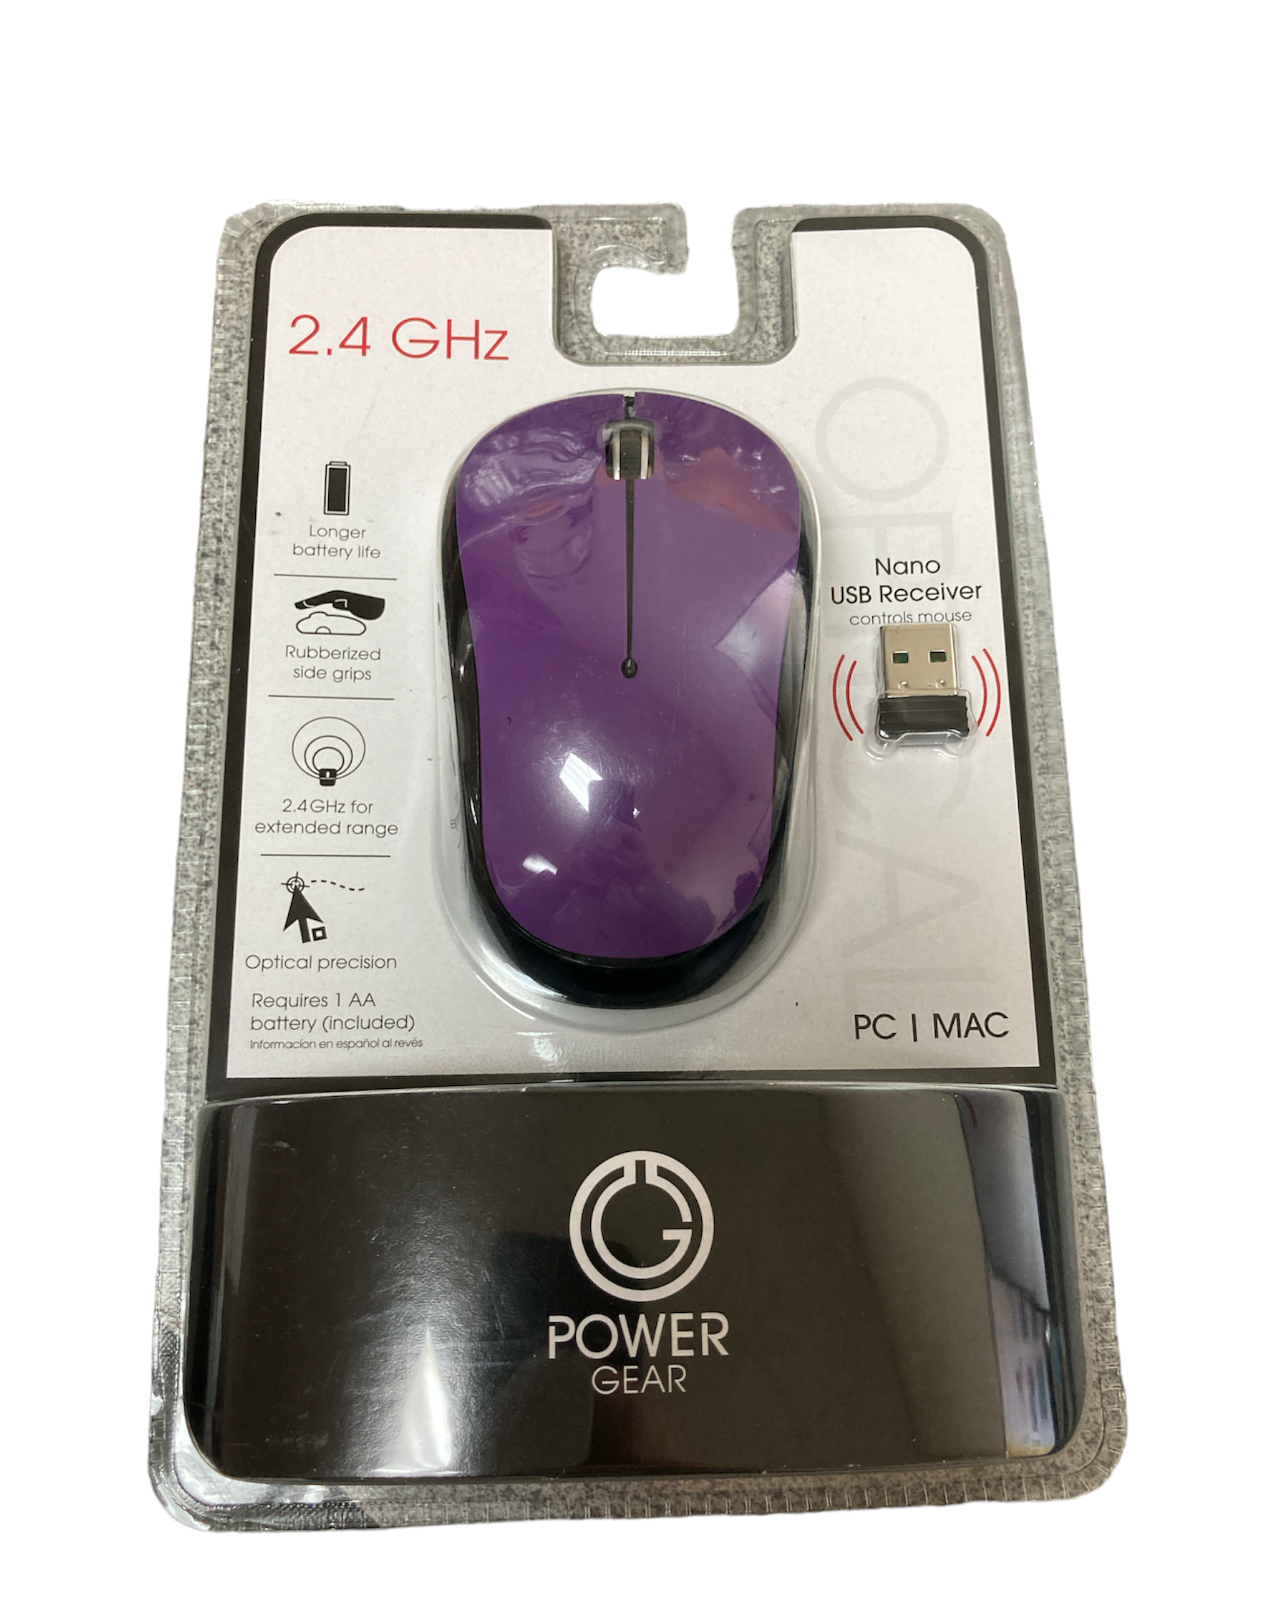 Power Gear 2.4 GHz Computer Mouse W/ Nano USB Receiver for PC/MAC - Purple